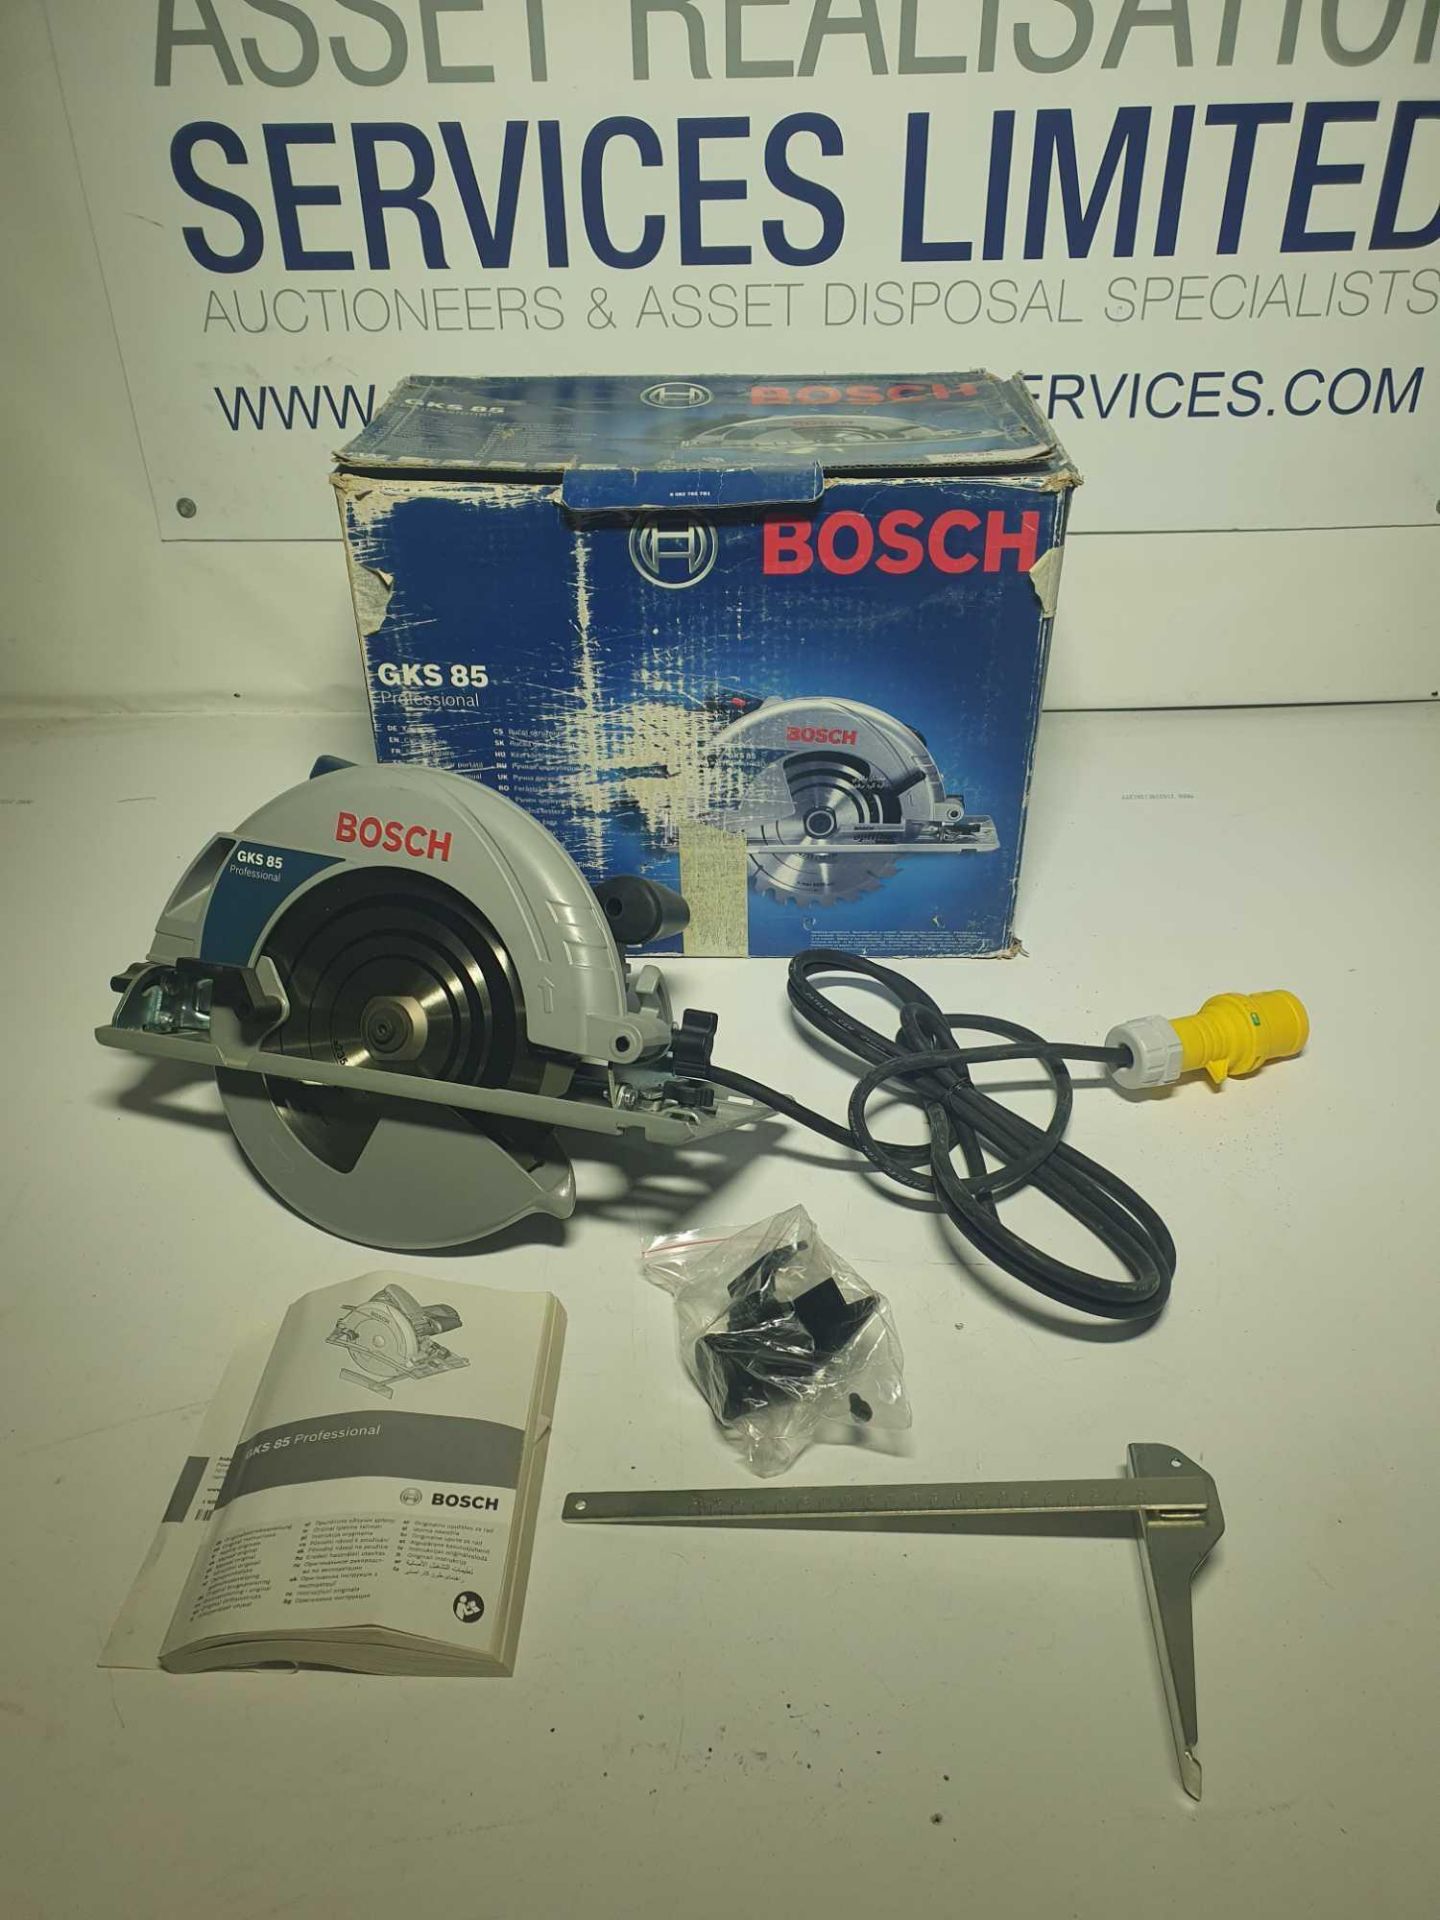 Bosch gks 85 110v circular saw - Image 2 of 2